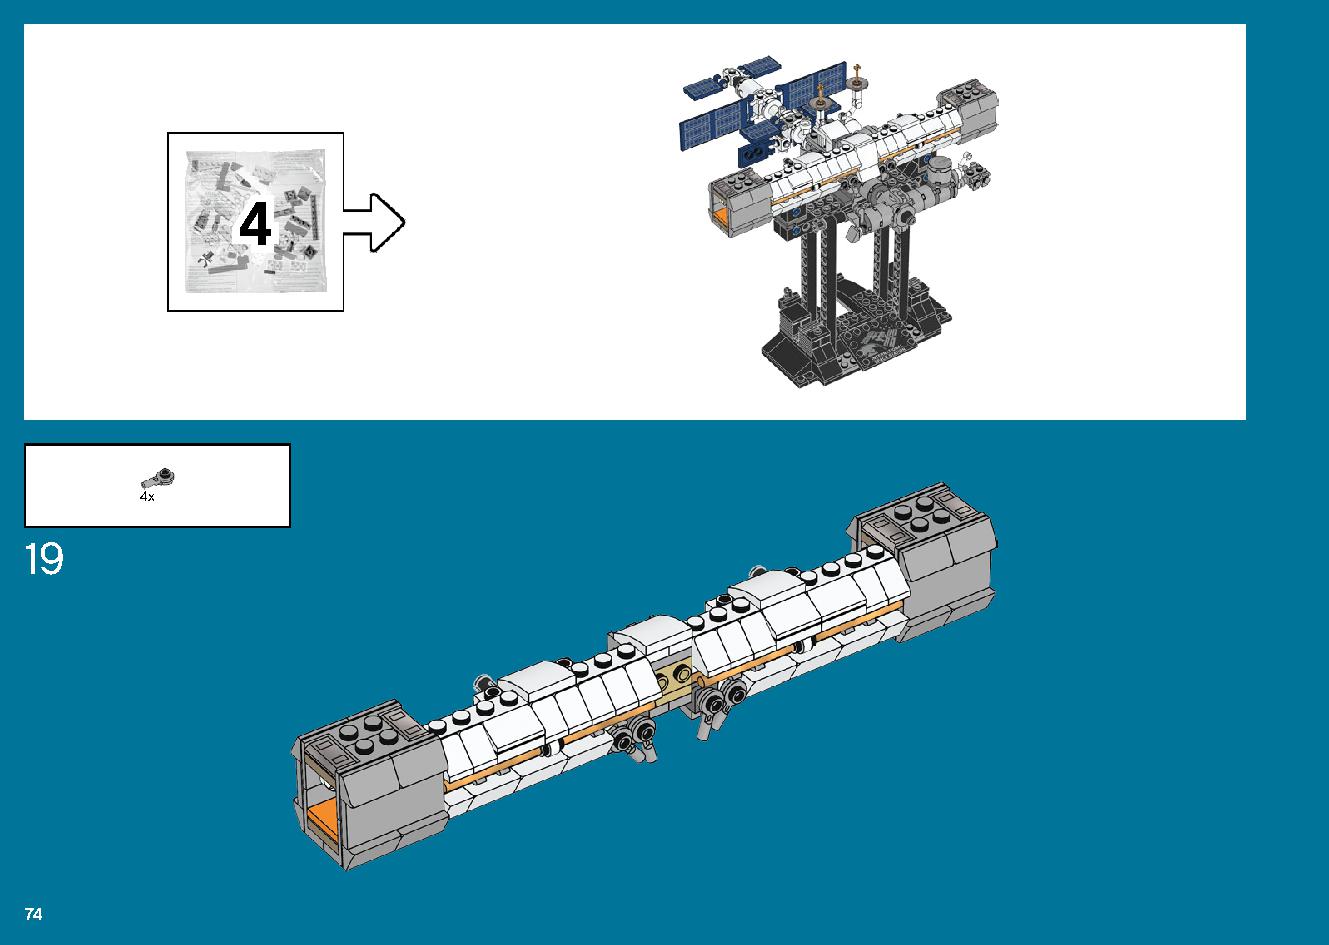 International Space Station 21321 レゴの商品情報 レゴの説明書・組立方法 74 page